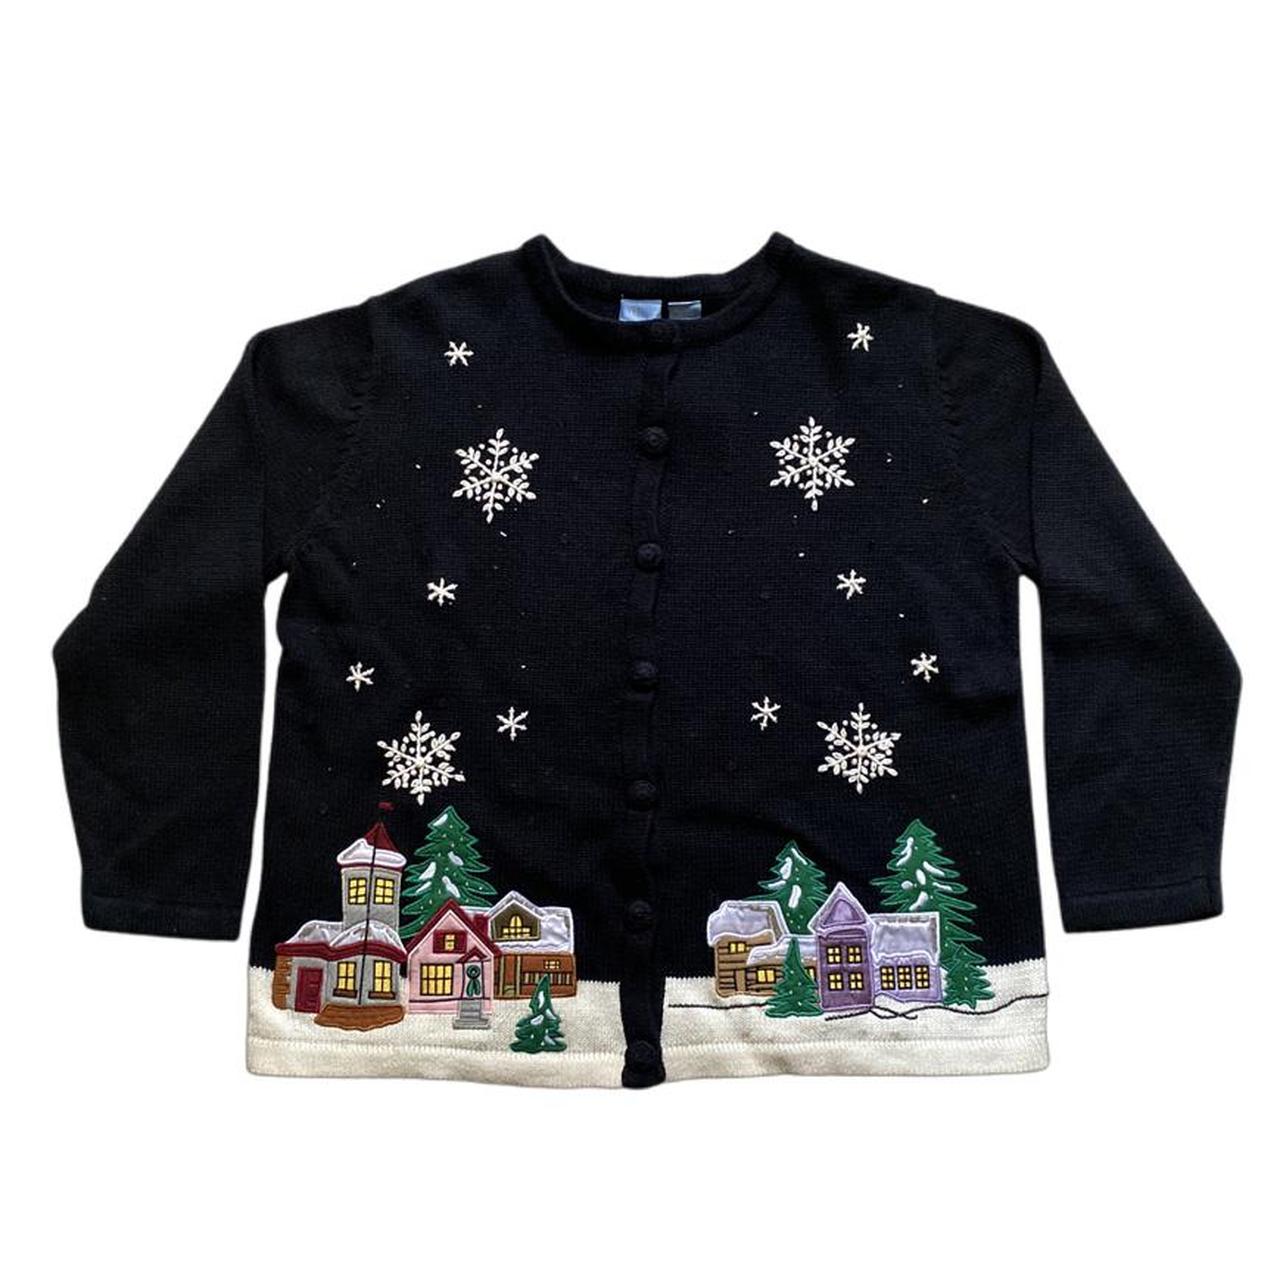 Product Image 1 - NWT Kmart Christmas sweater cardigan